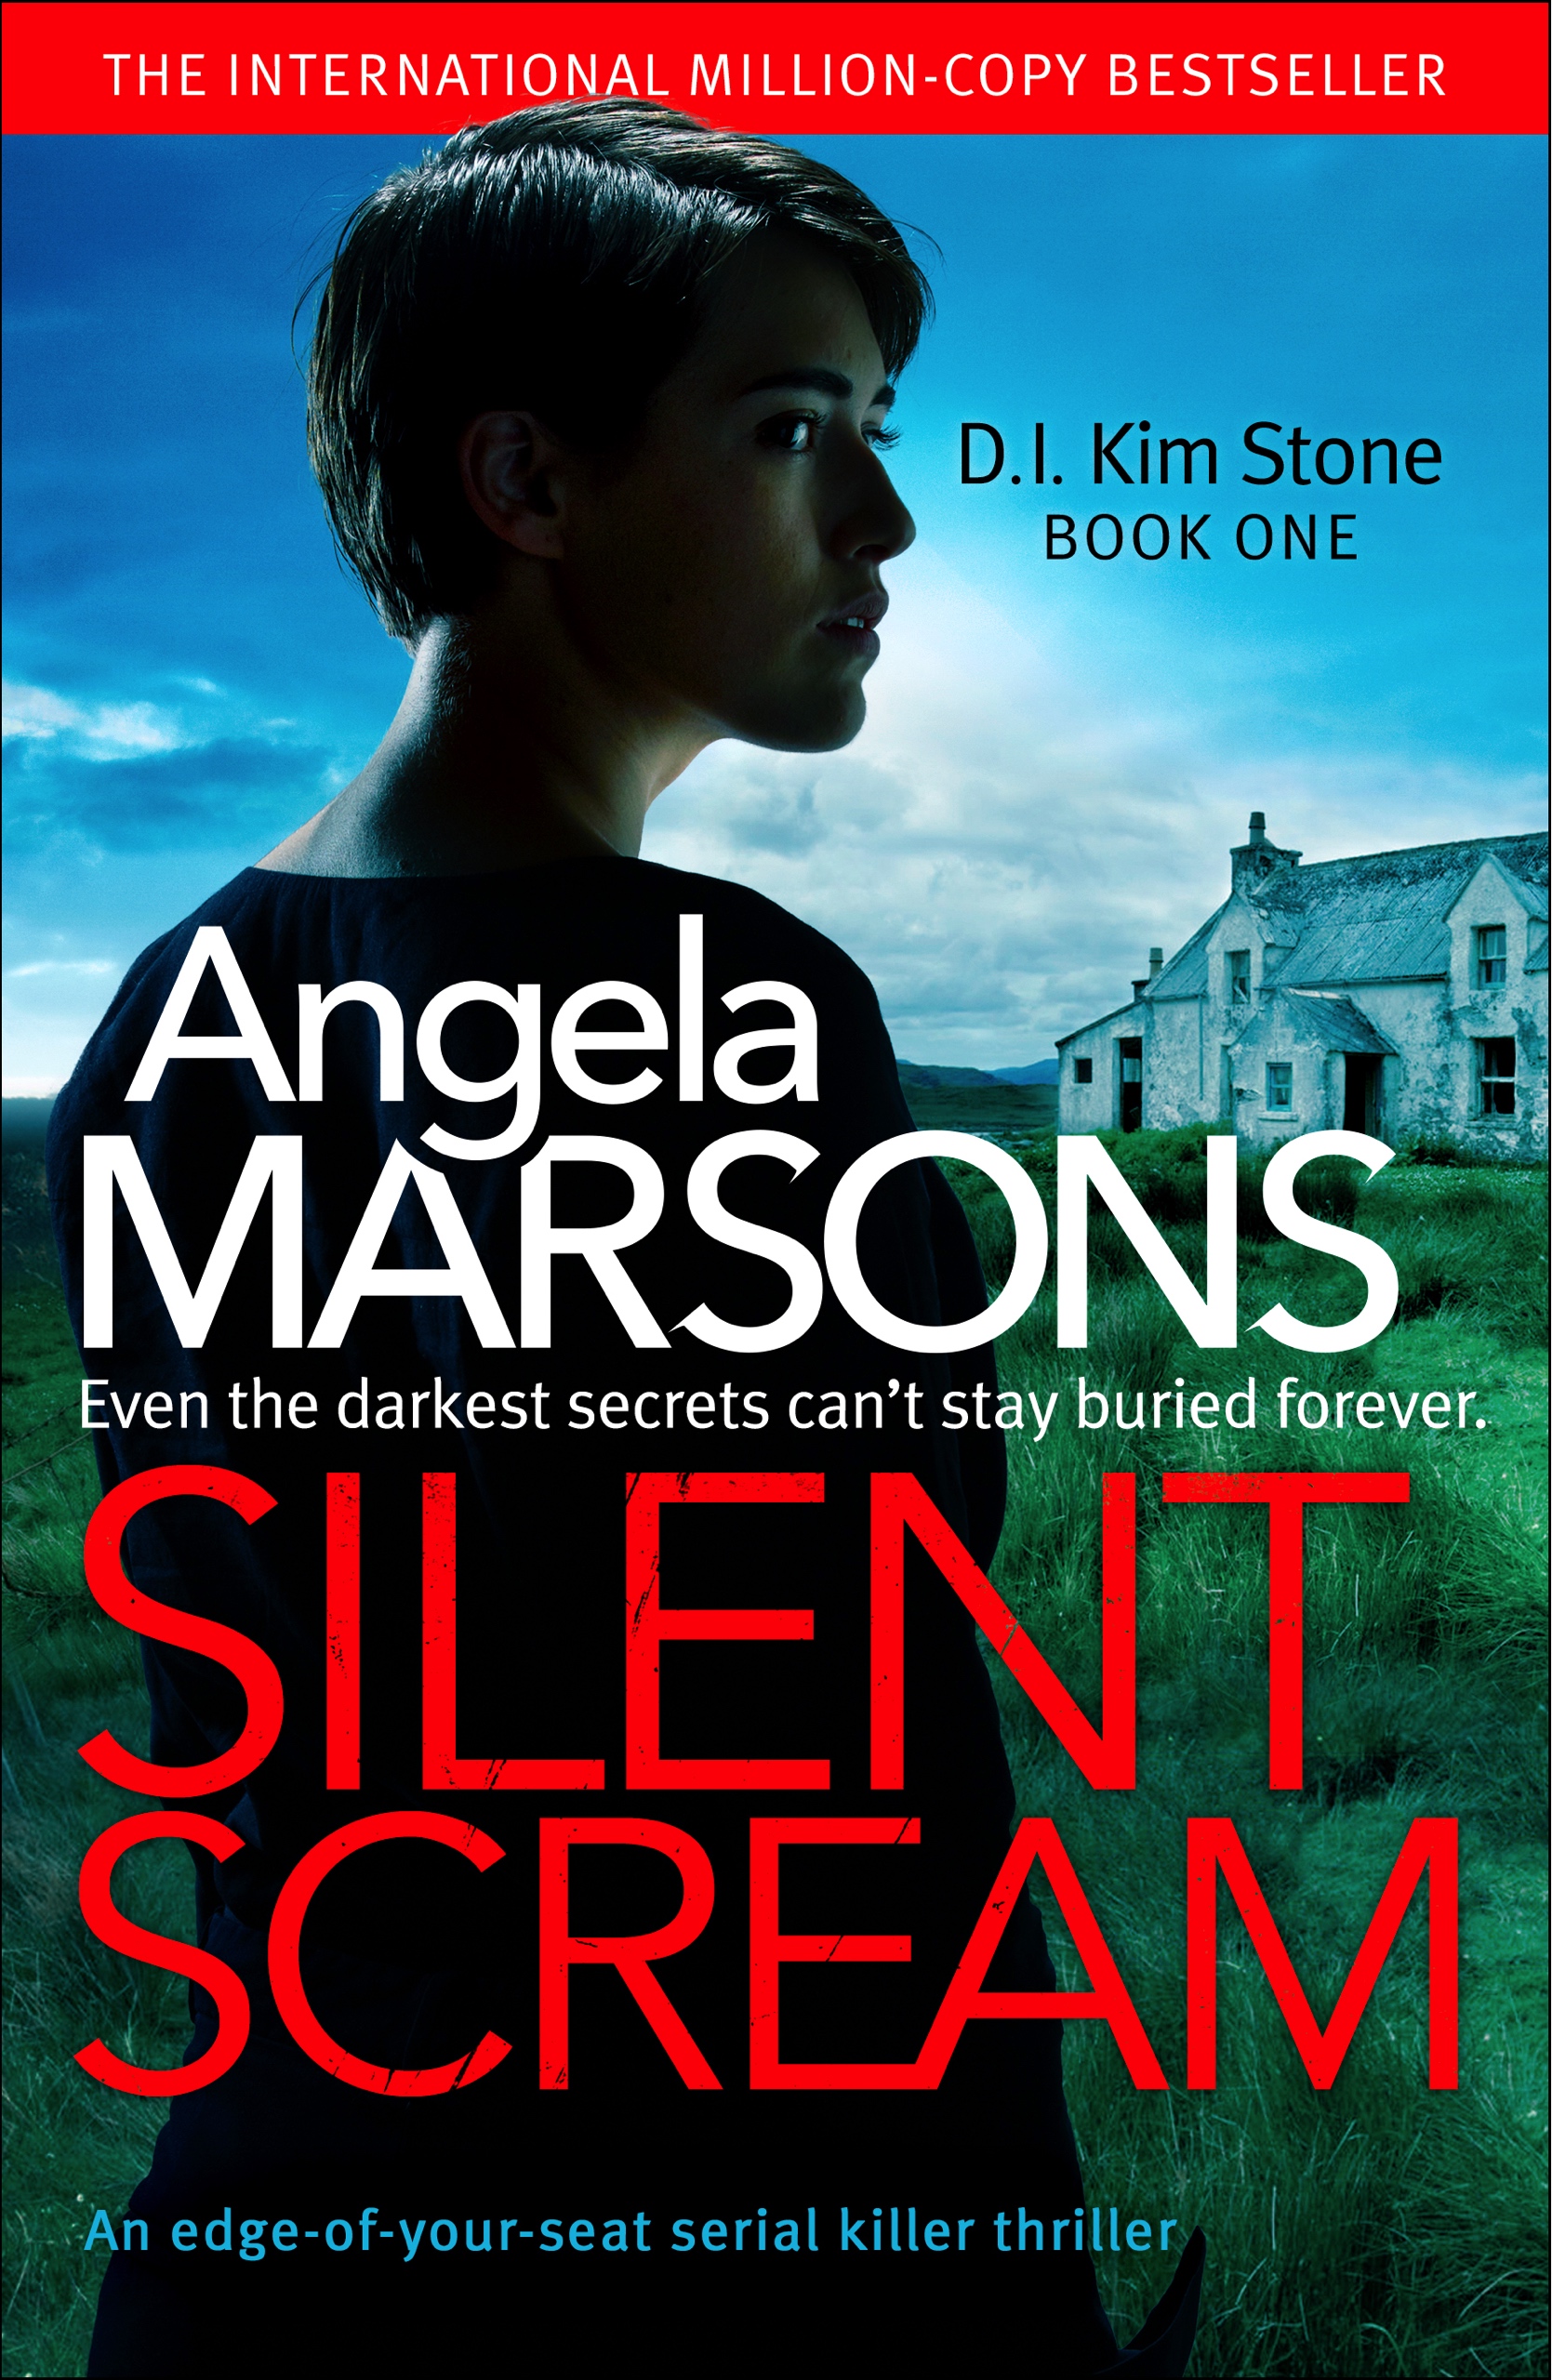 [EPUB] D.I. Kim Stone #1 Silent Scream by Angela Marsons